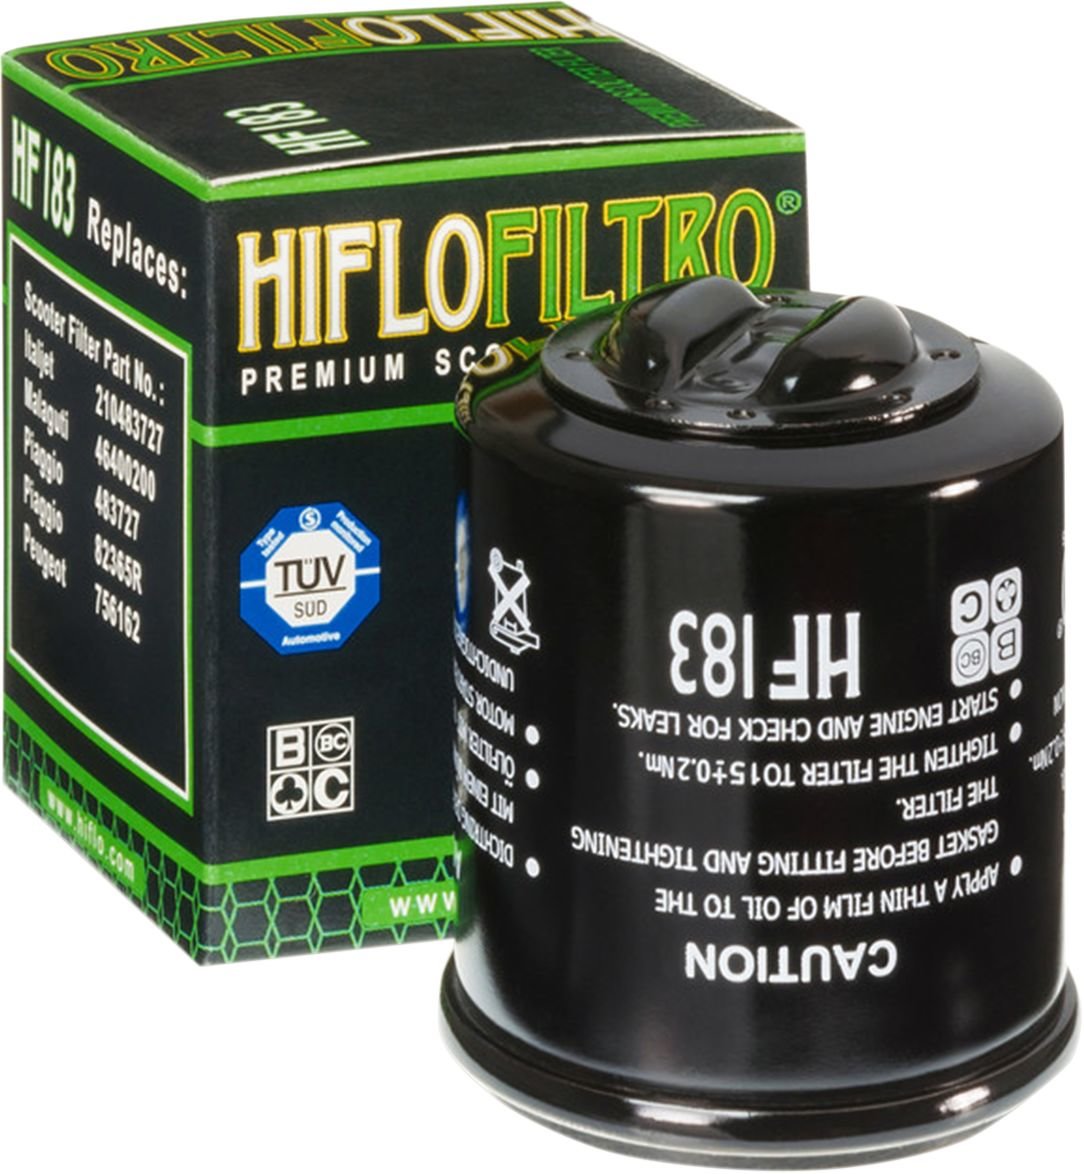 HIFLOFILTRO Filteroil Hiflofiltr Aprl von HifloFiltro